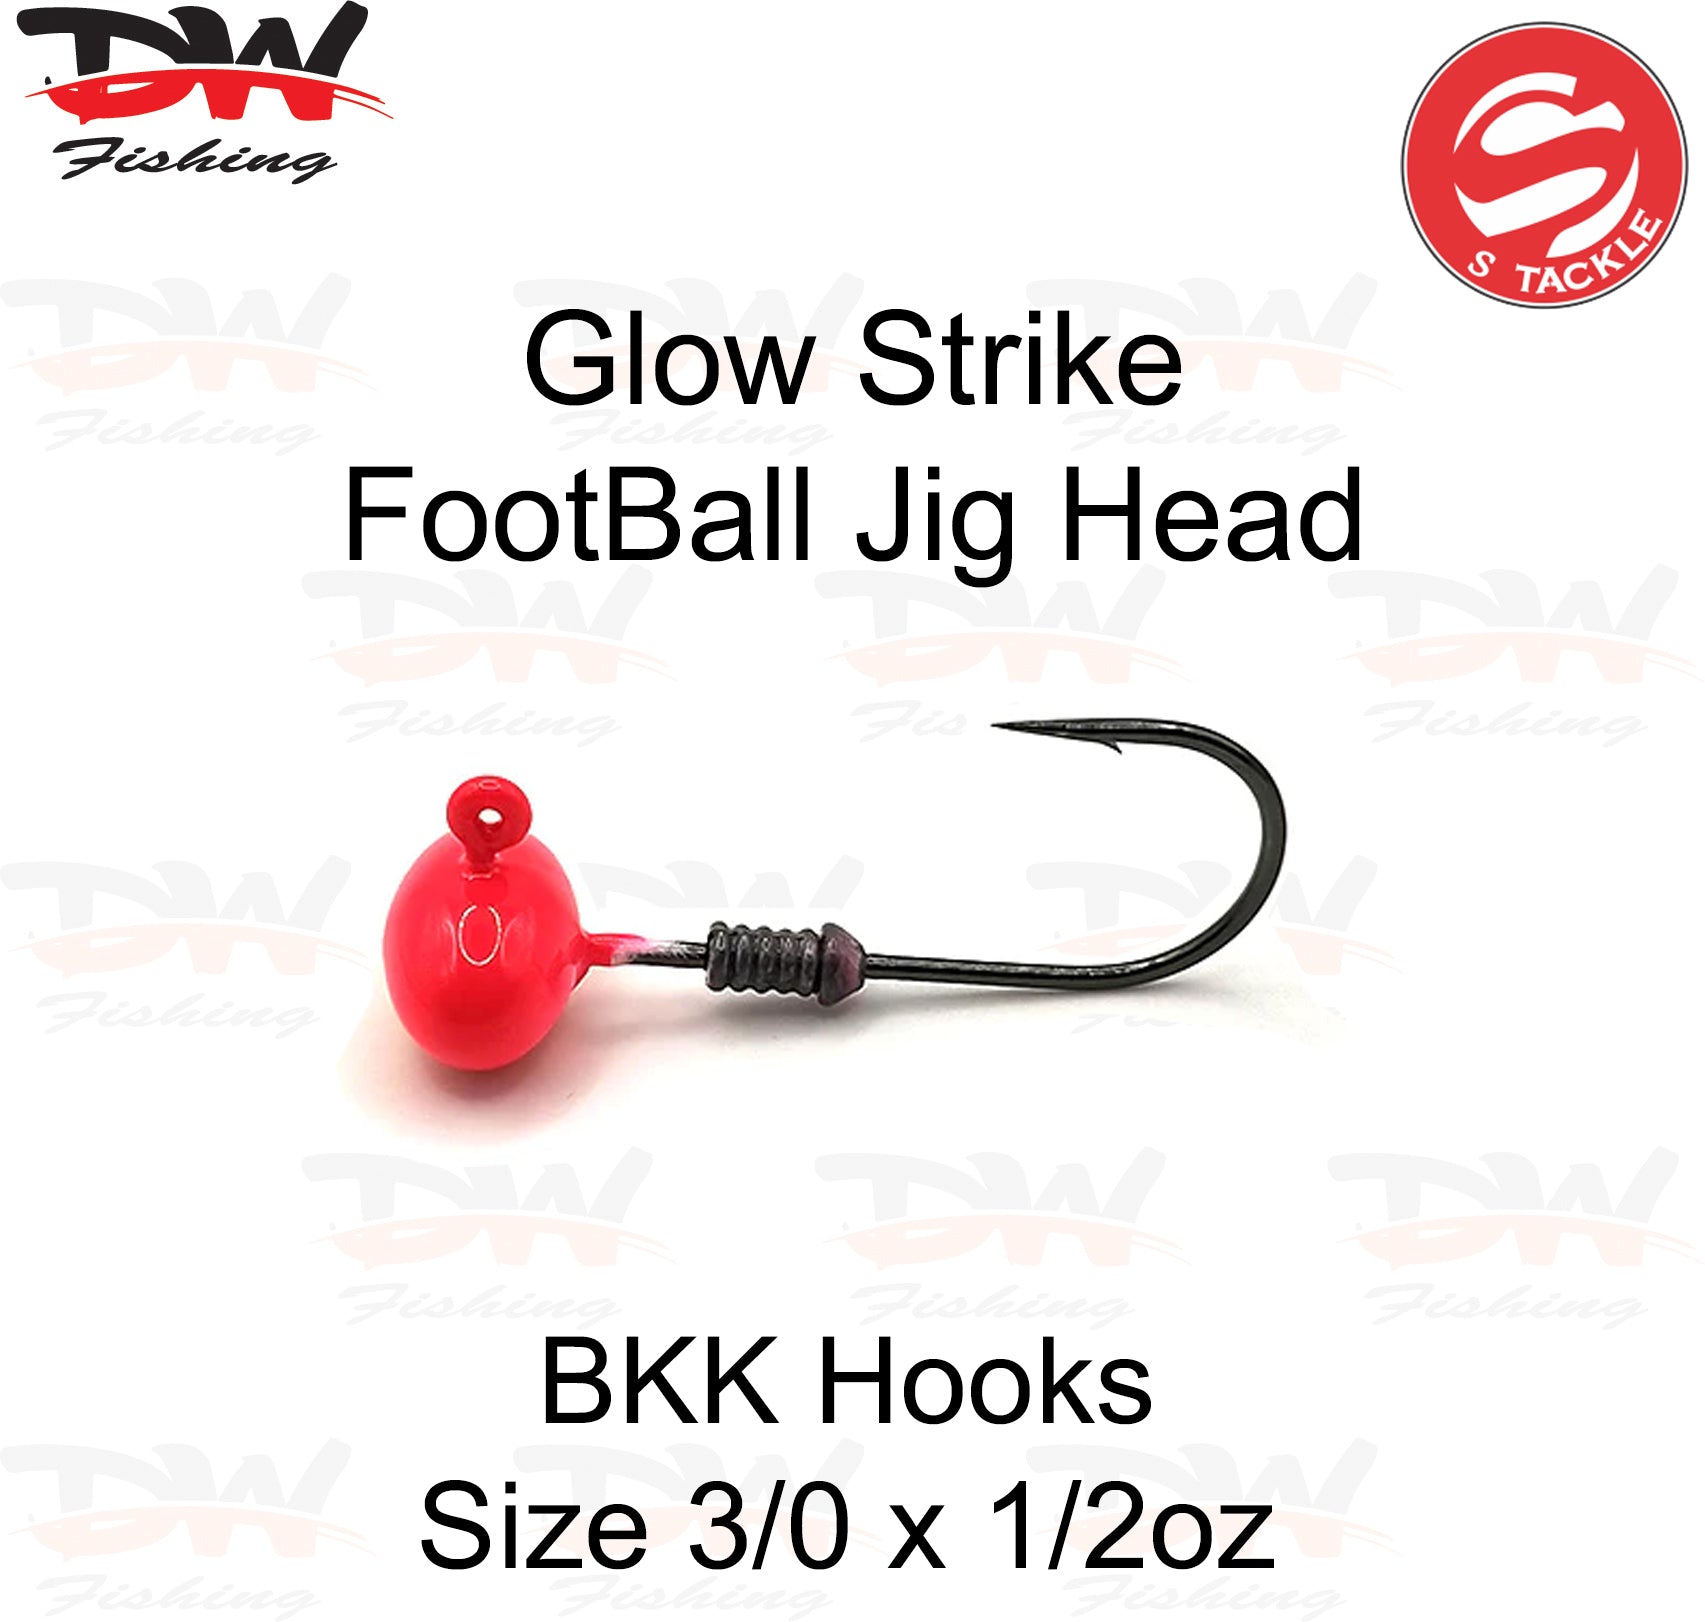 S Tackle Glow strike football jig head on BKK hooks size 3/0 1/2oz